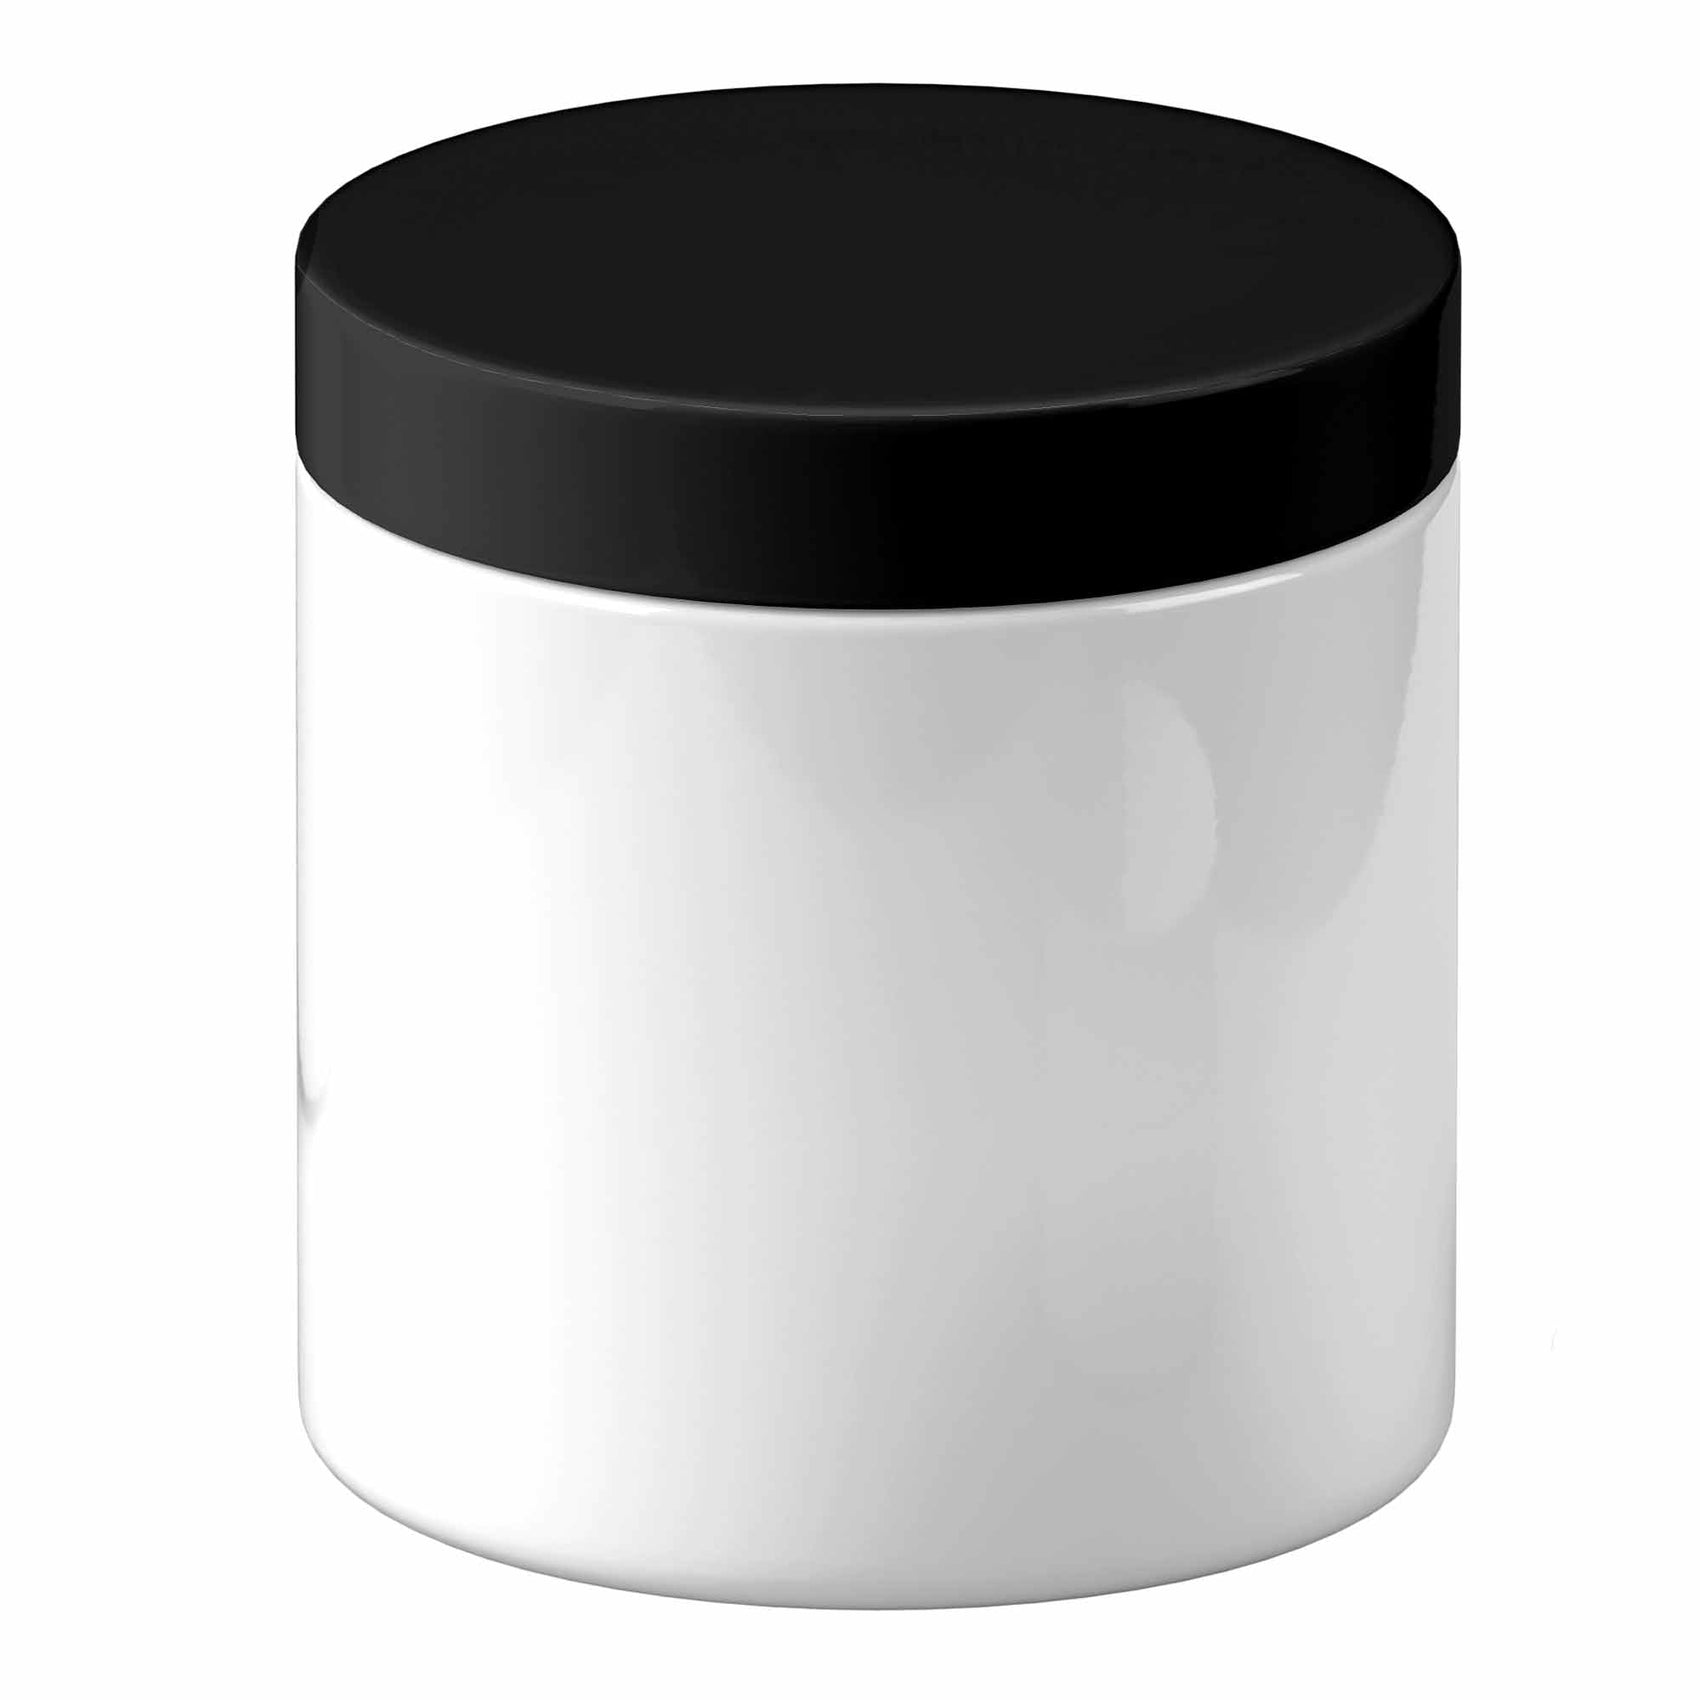 5x 250g Plastic Cosmetic Jar + Lids - Empty White Cream Container